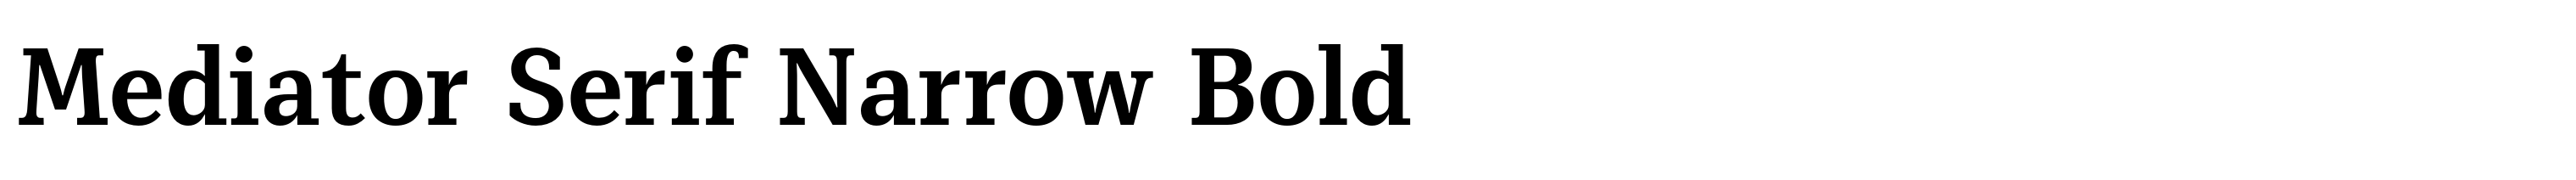 Mediator Serif Narrow Bold